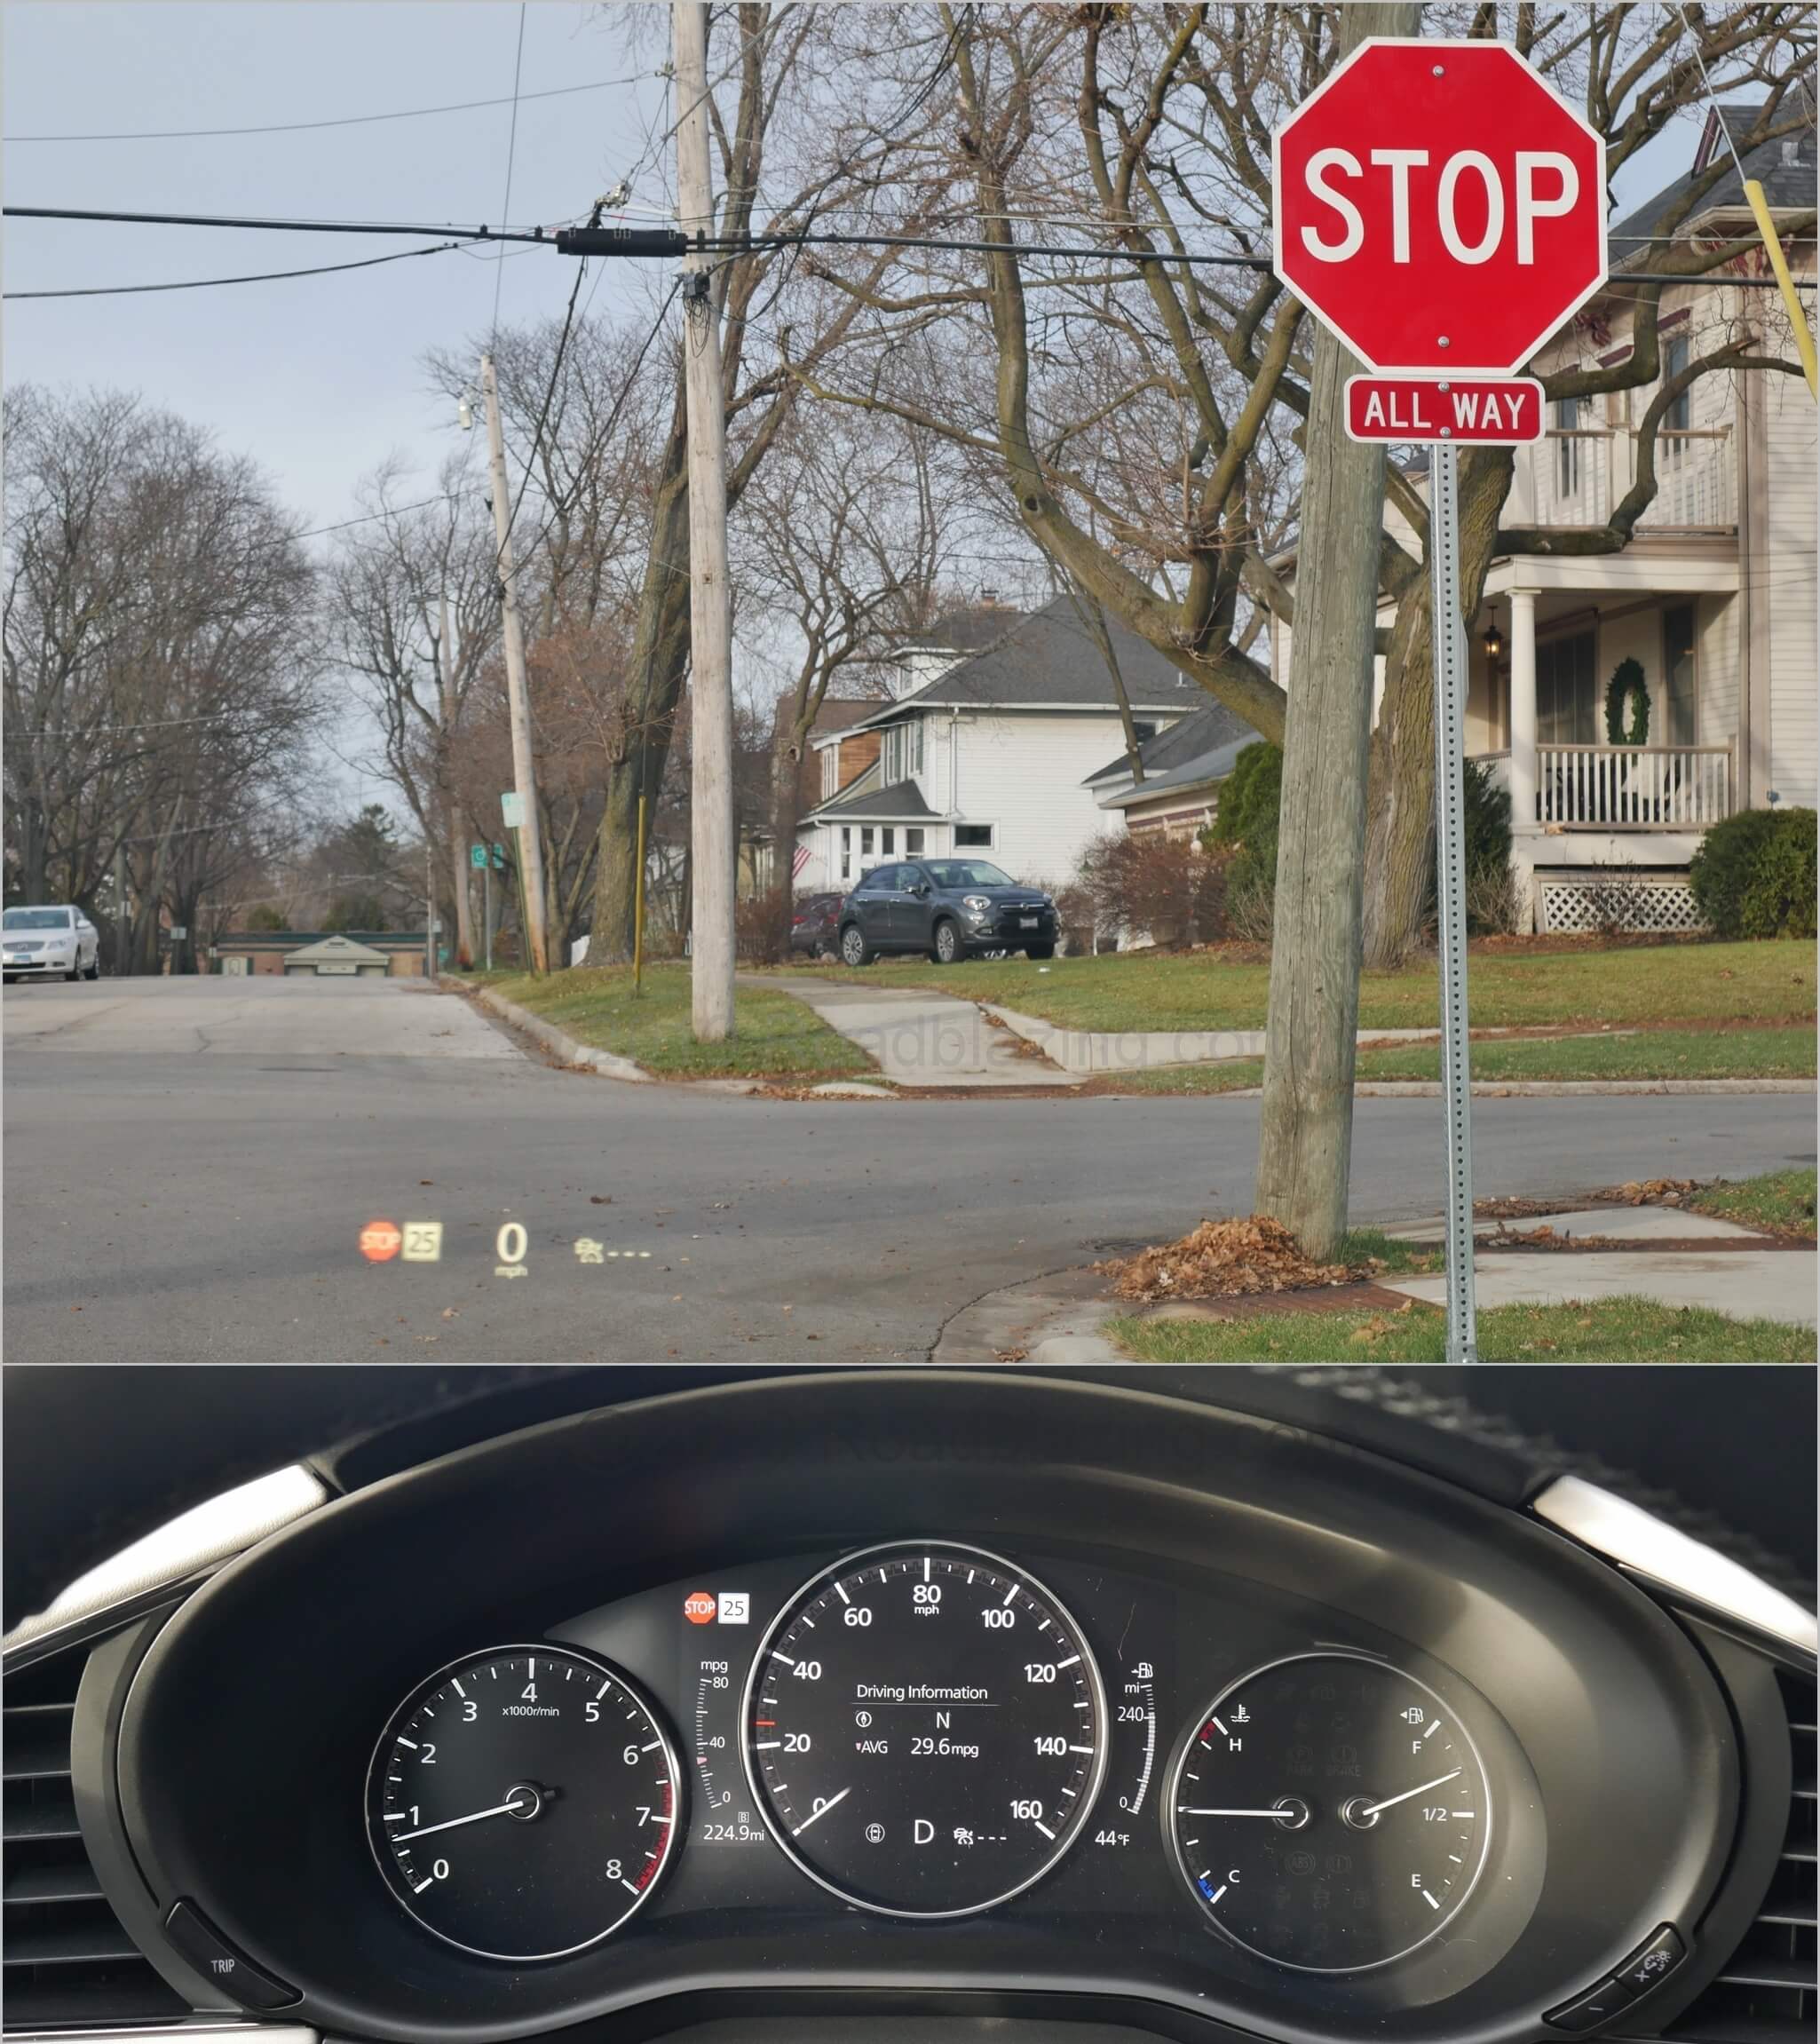 2020 Mazda 3 sedan awd premium: heads up full color Adaptive Display w/ redundant traffic sign recognition